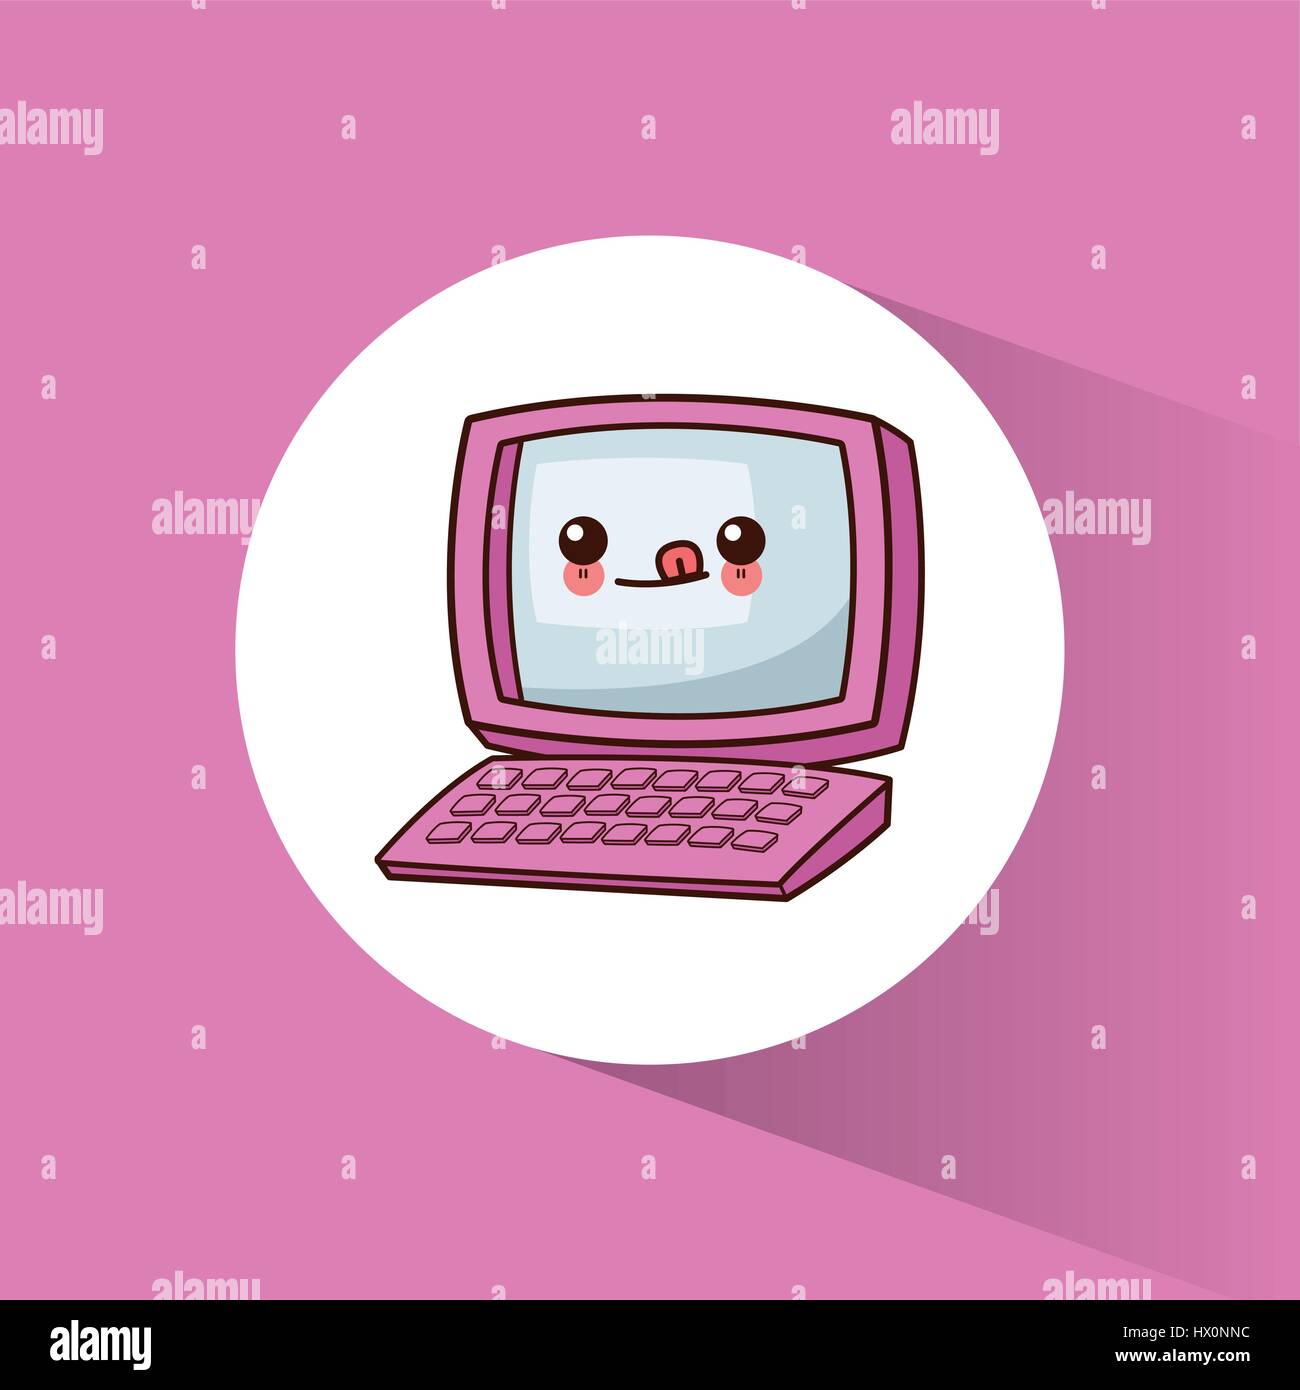 Computer kawaii cartoon happy cute Stock Vector Images - Alamy